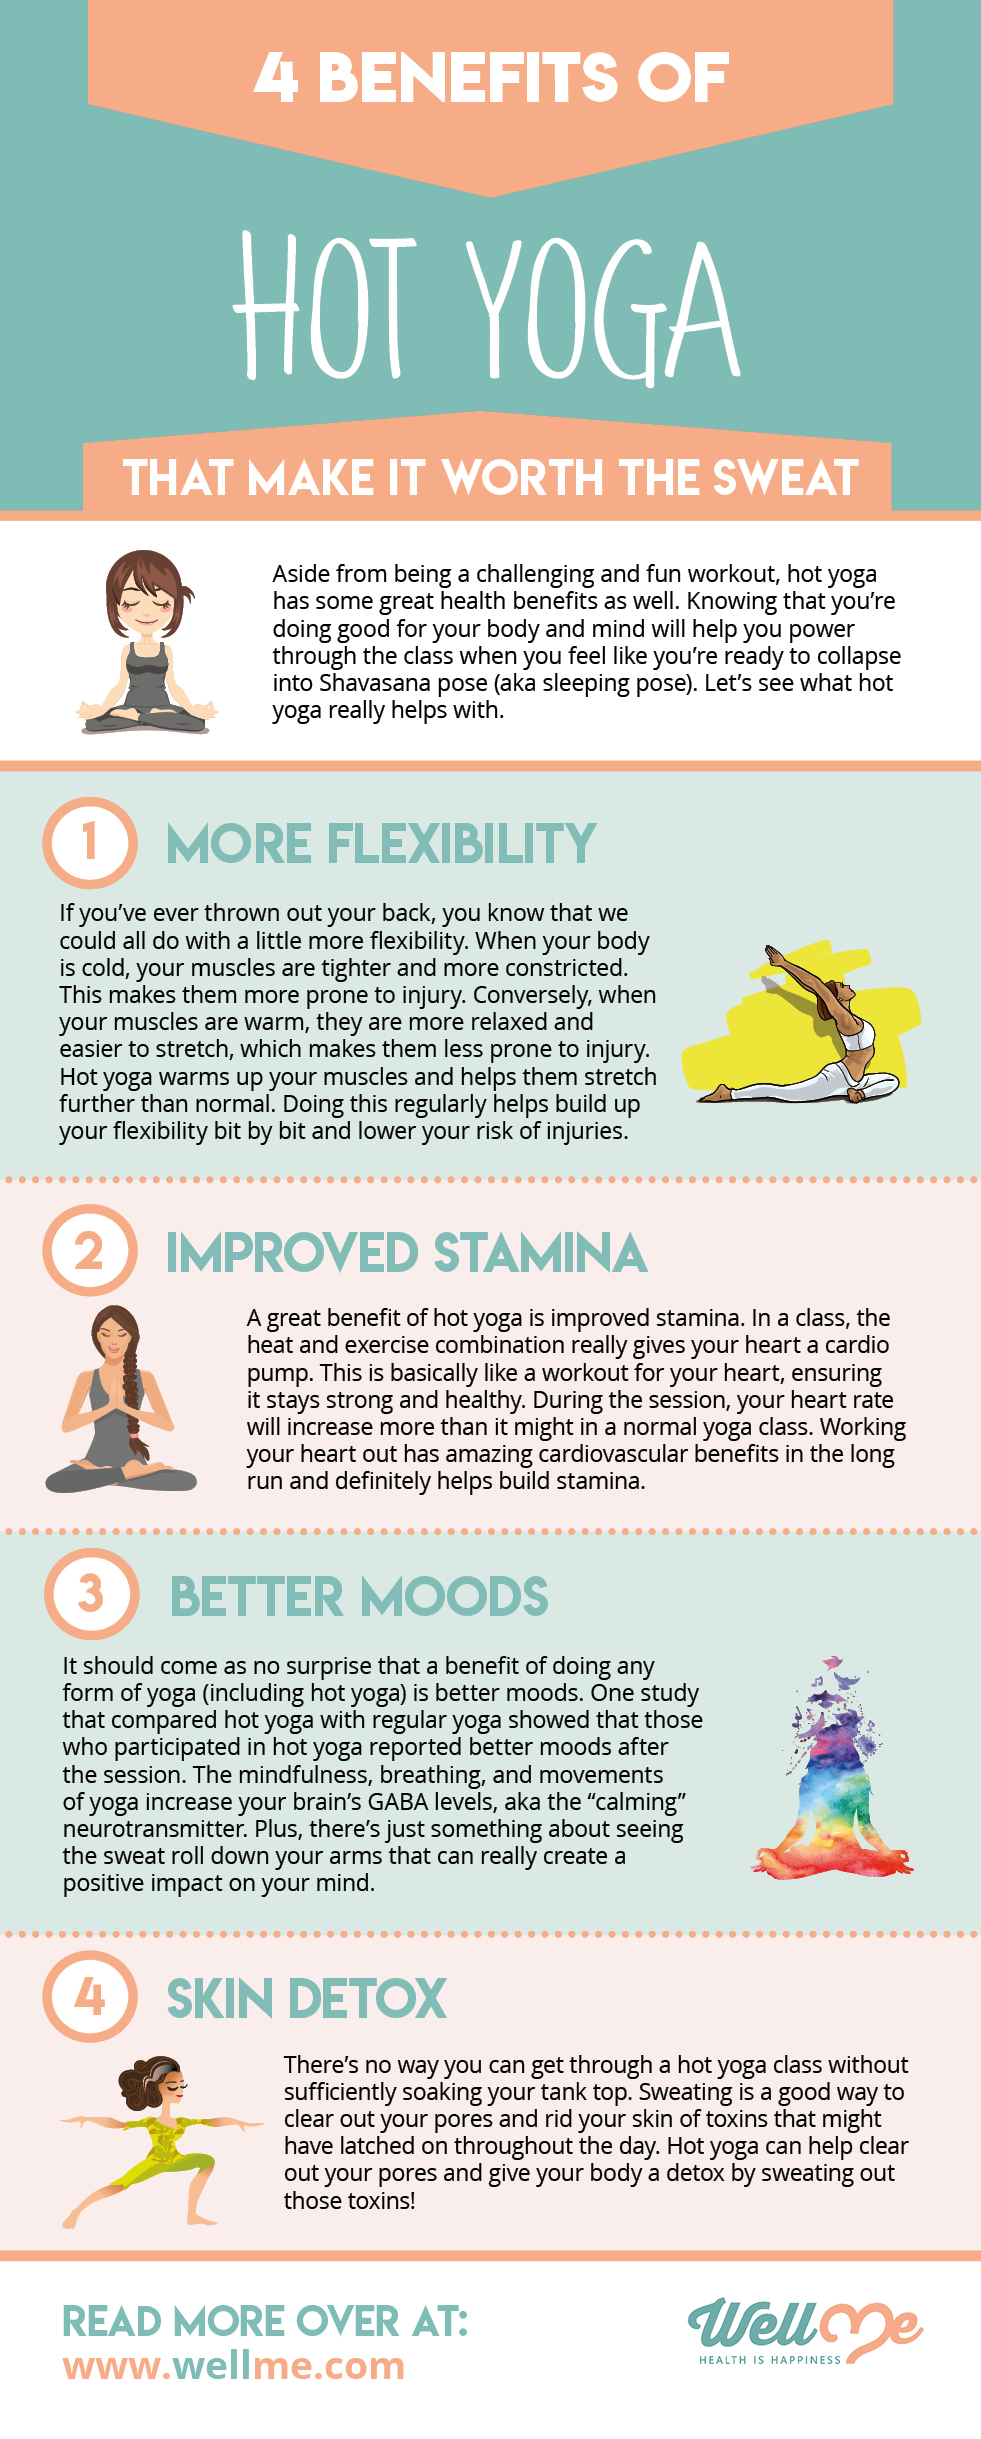 4 Benefits of Hot Yoga That Make it Worth the Sweat